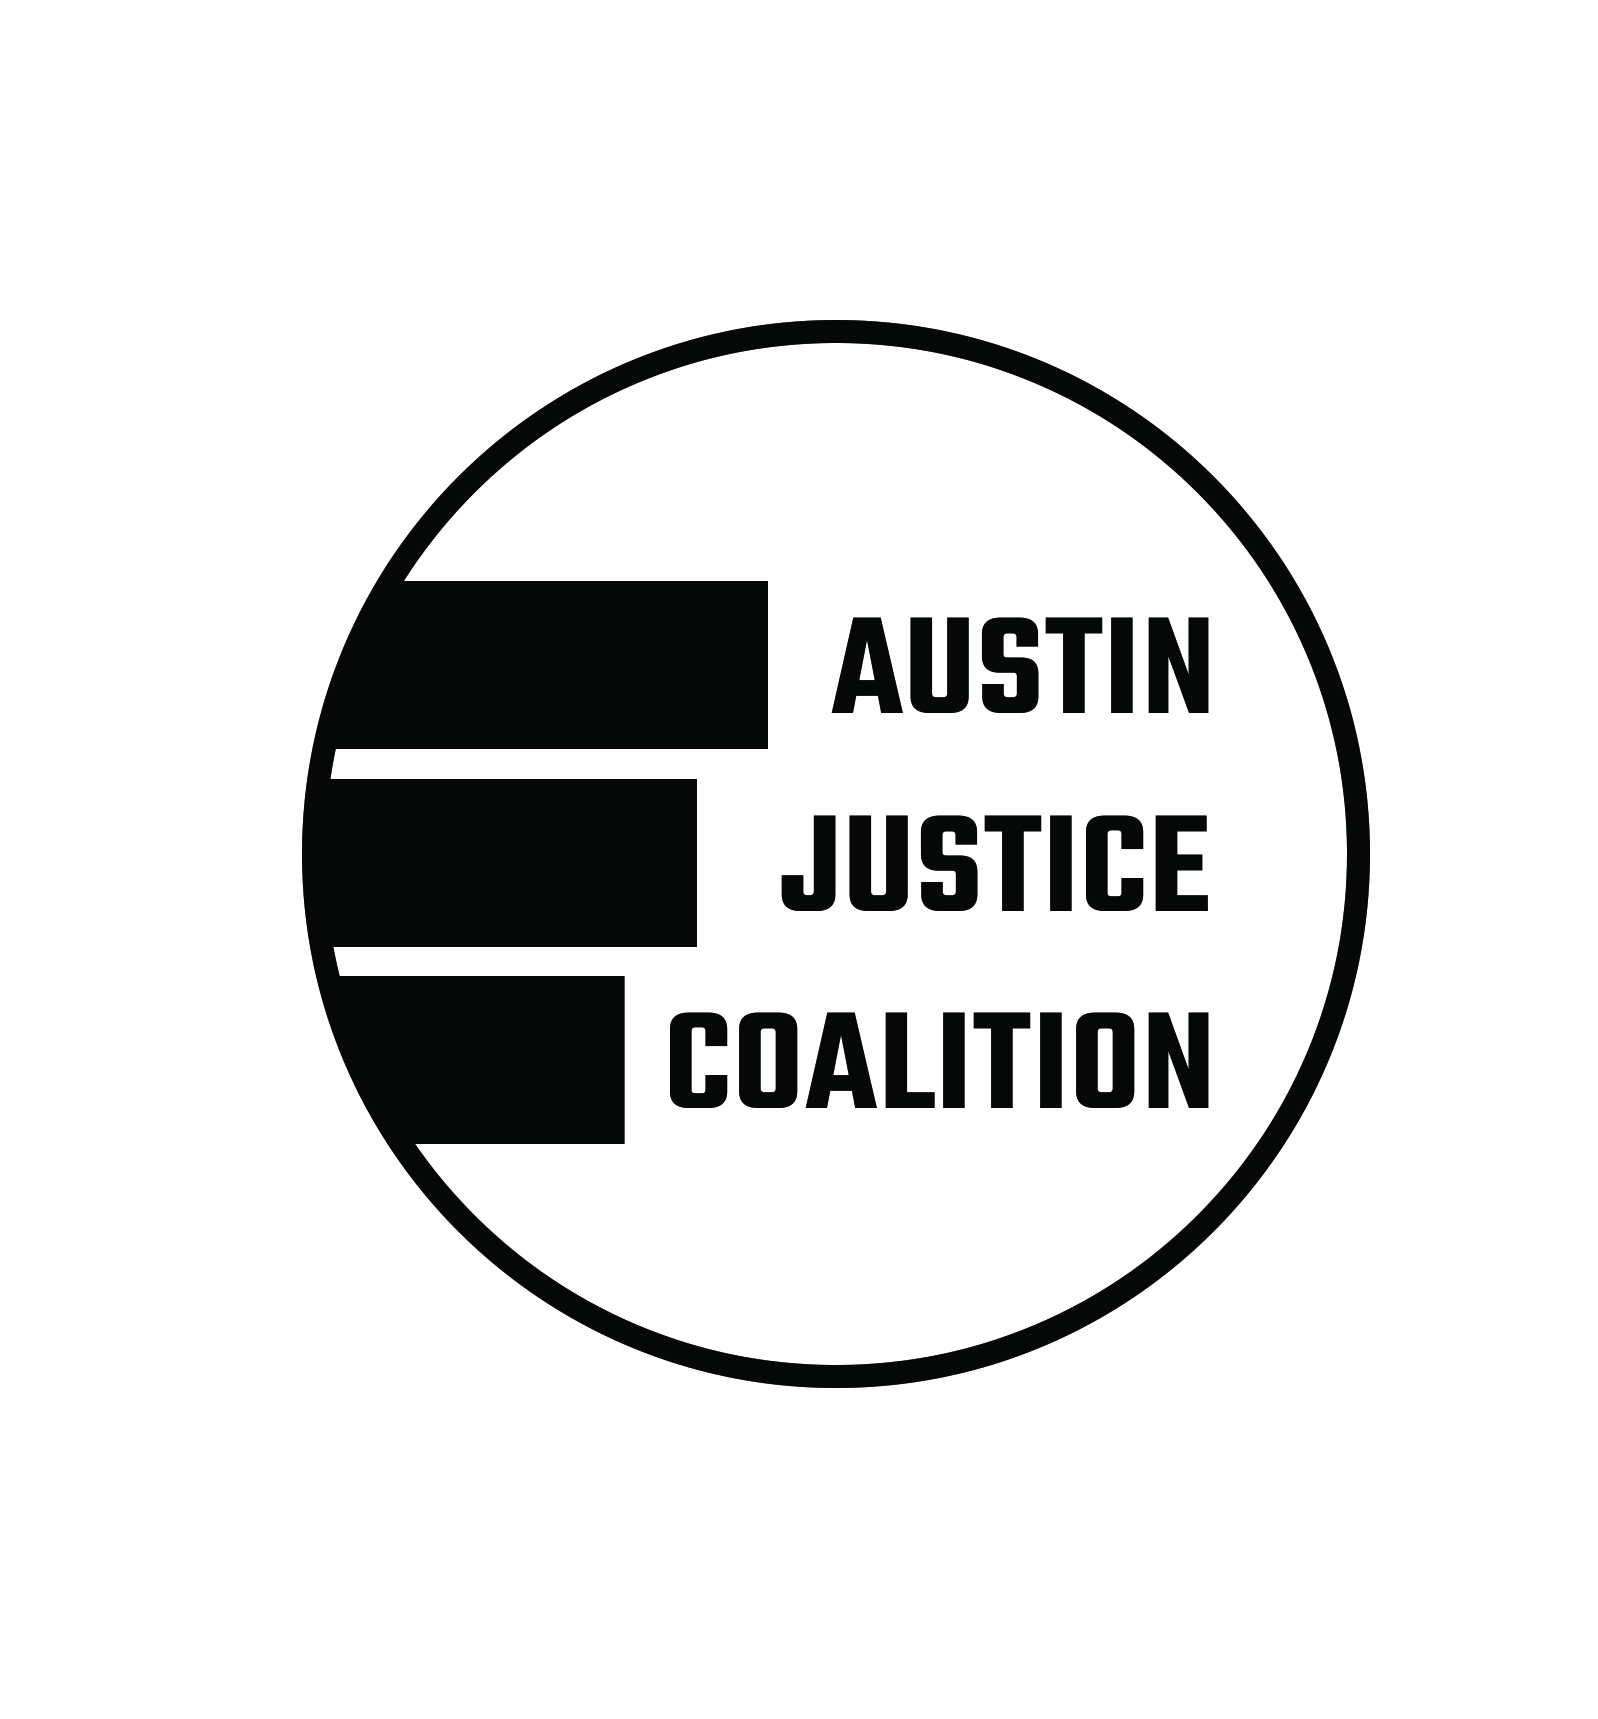 Austin Justice Coalition